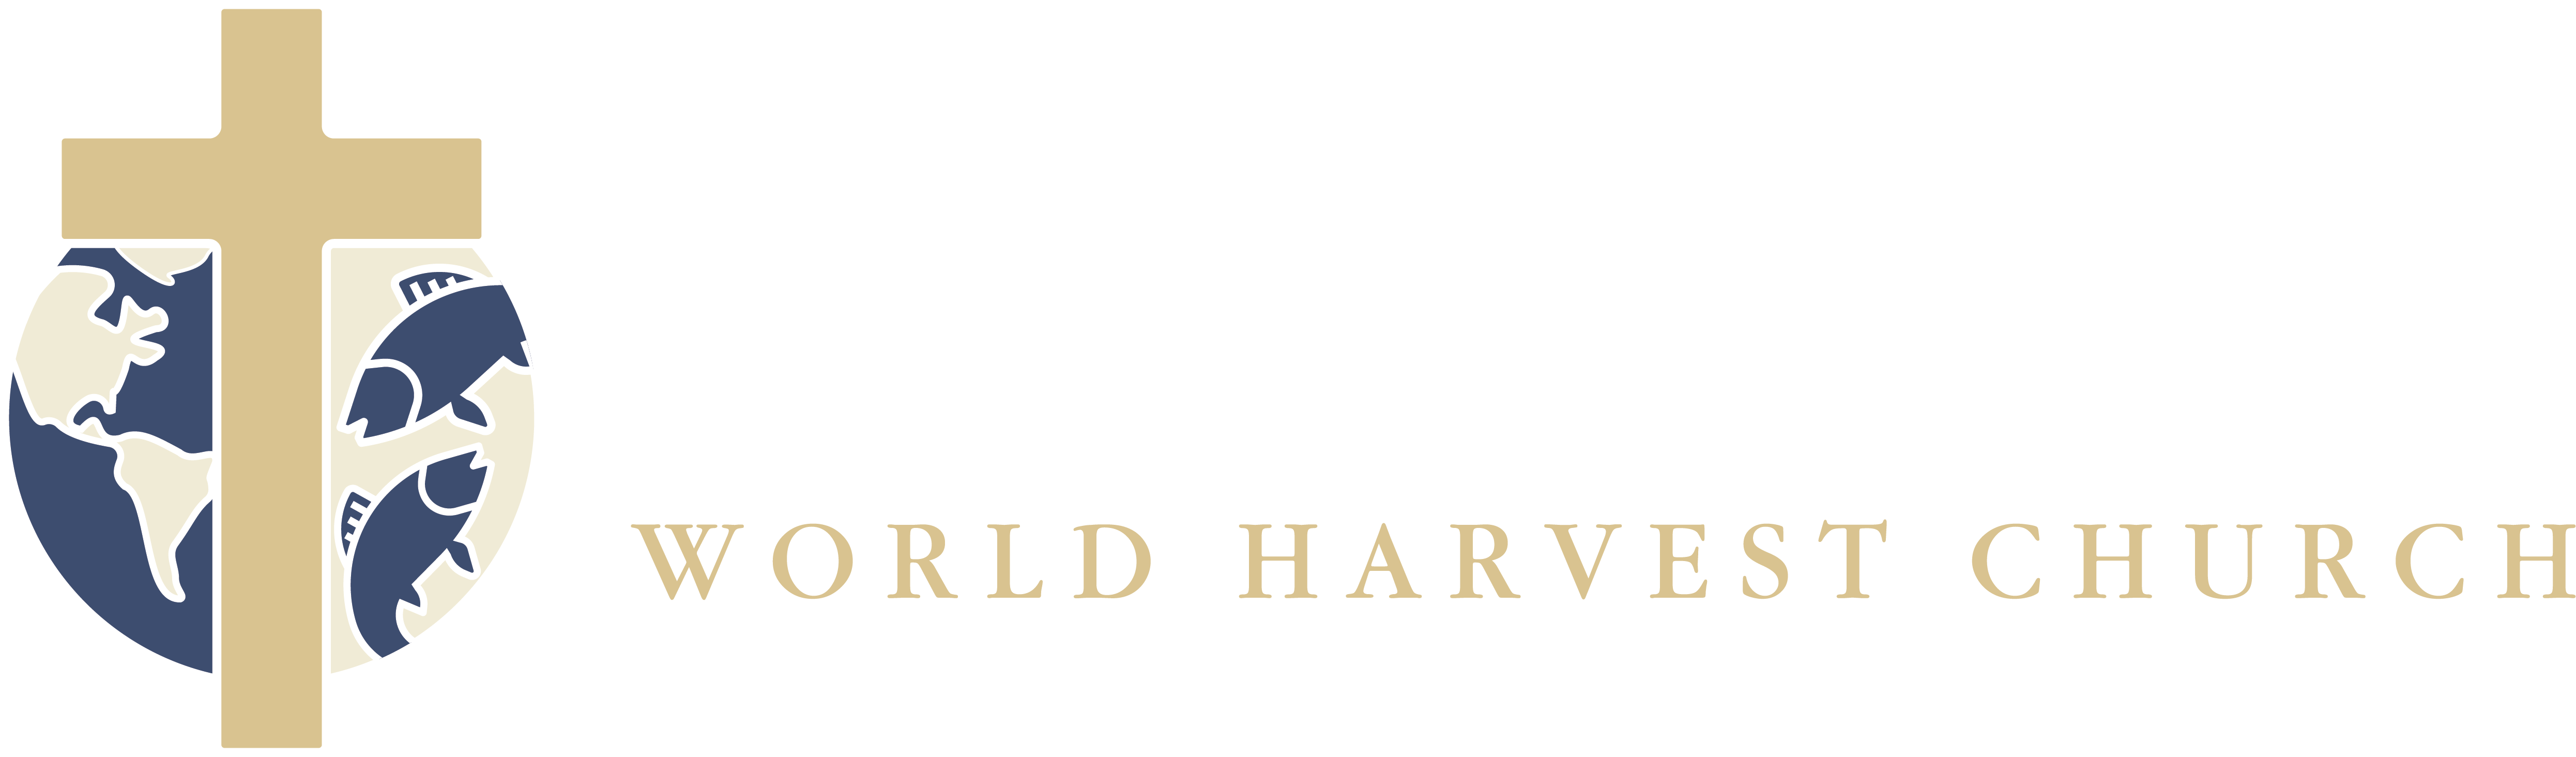 Fishers of Men - World Harvest Church